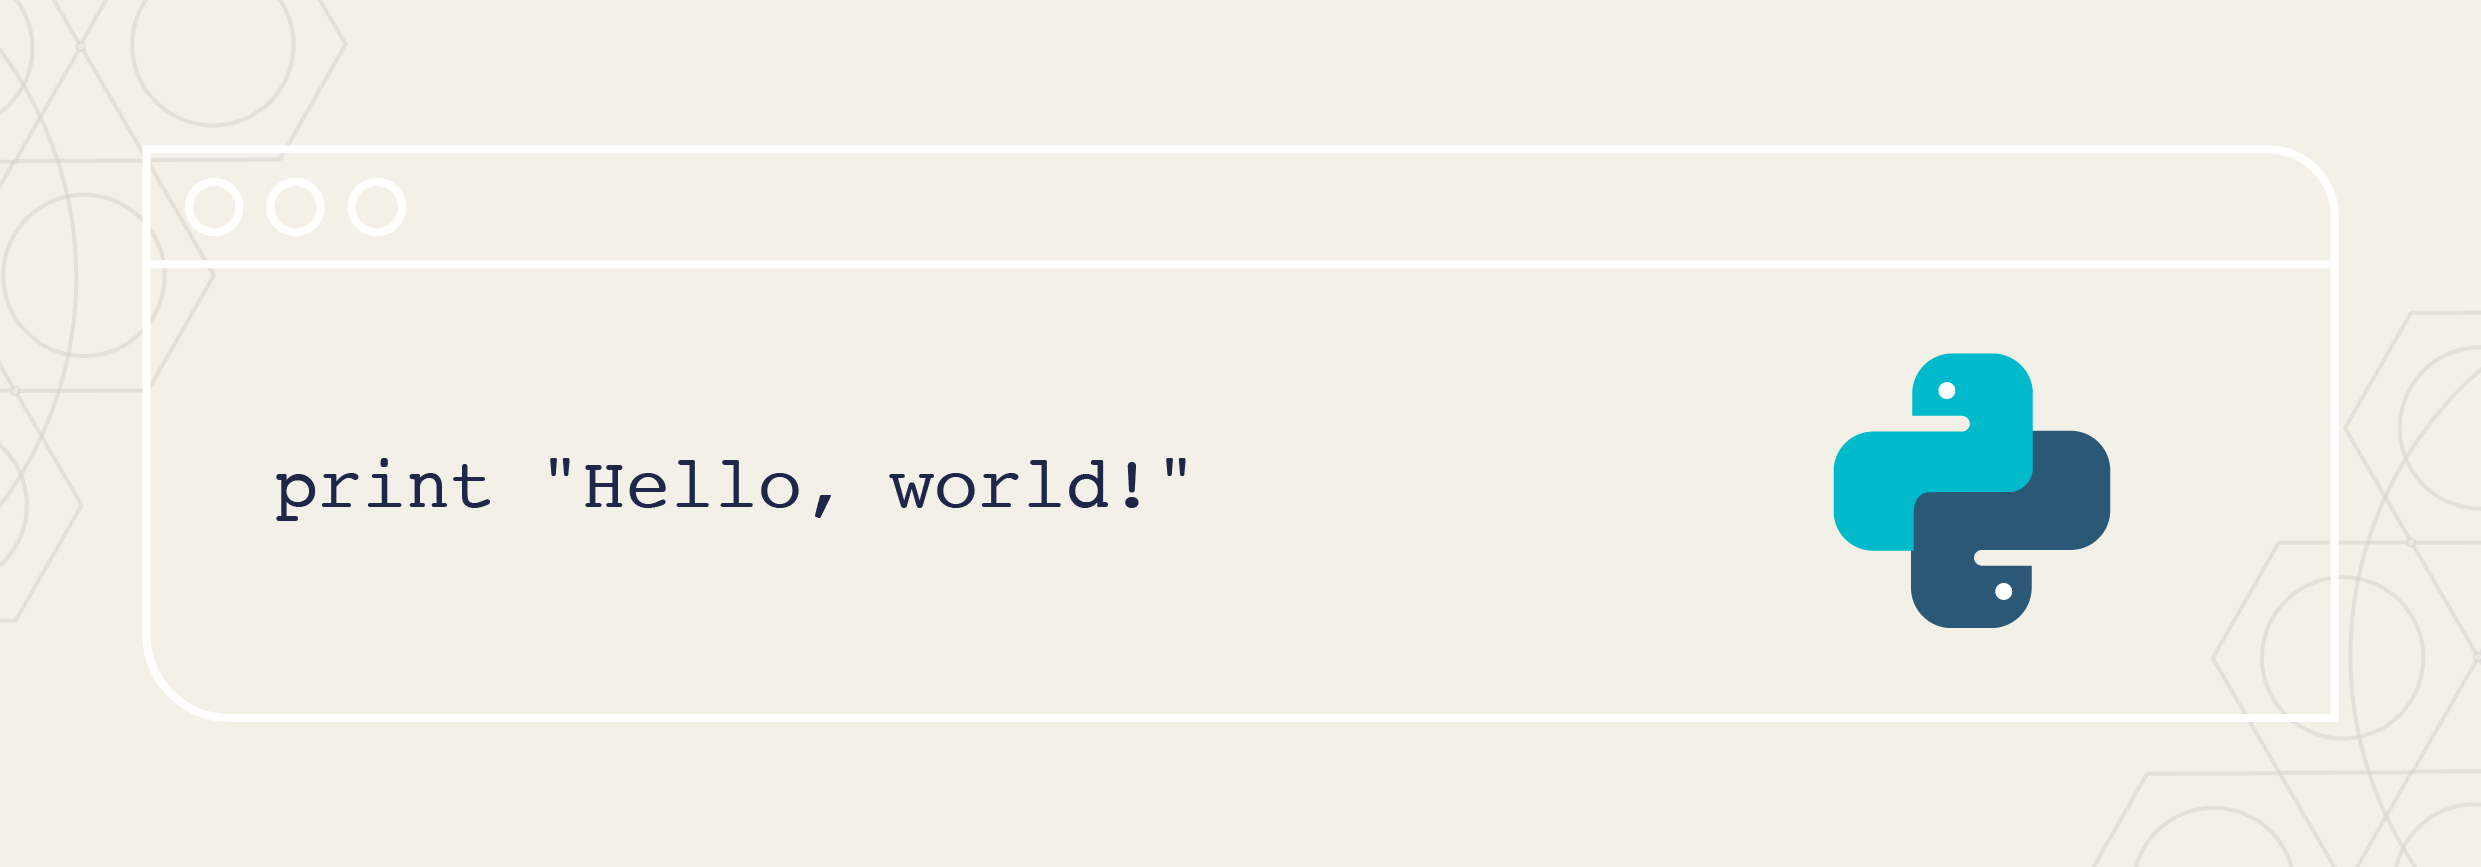 python programming language "hello world" code and logo